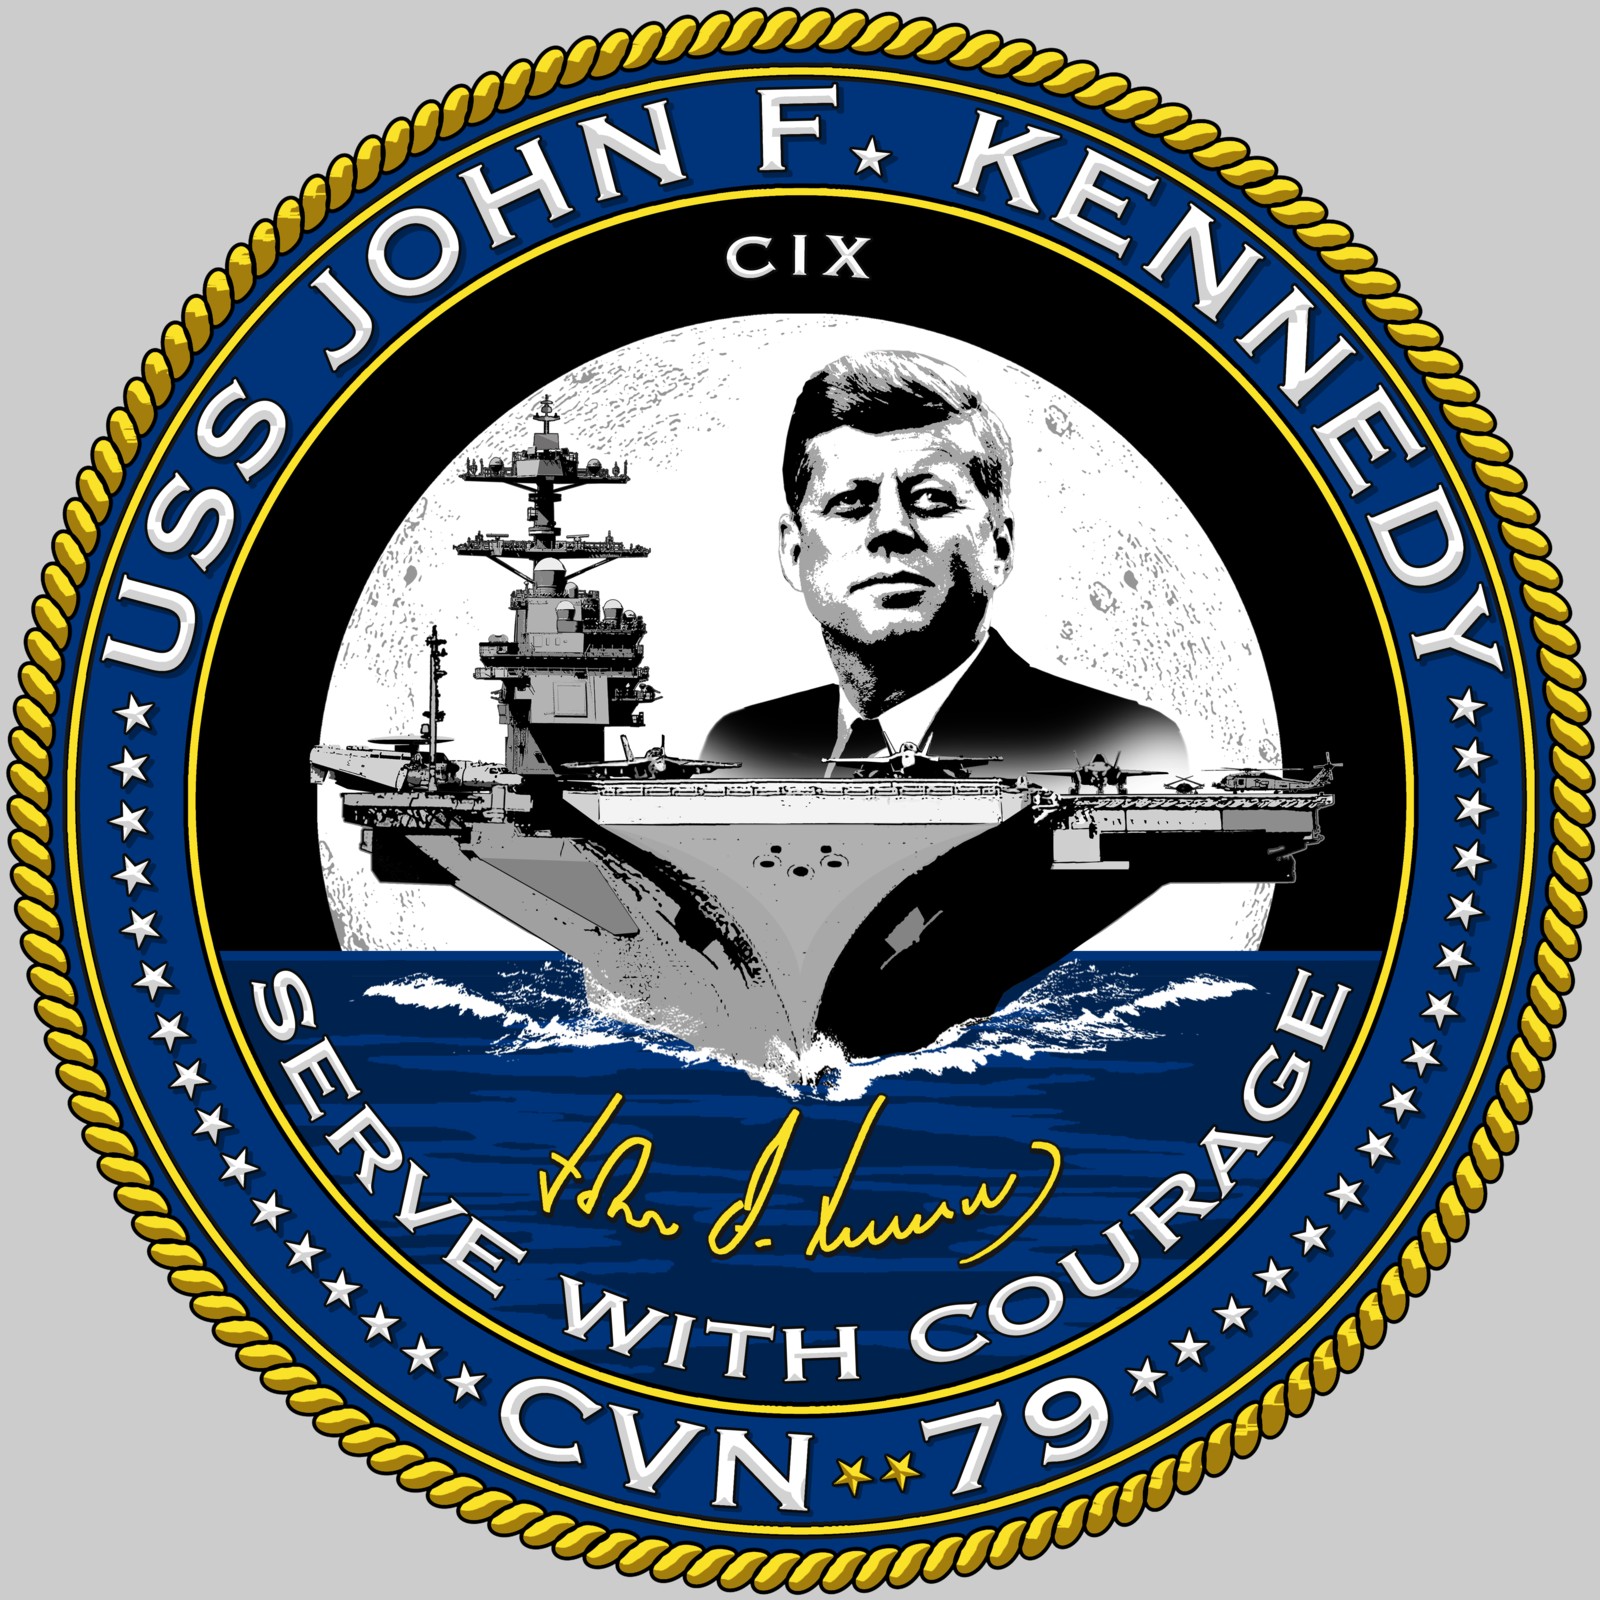 cvn-79 uss john f. kennedy insignia crest patch badge gerald ford class aircraft carrier us navy 02c